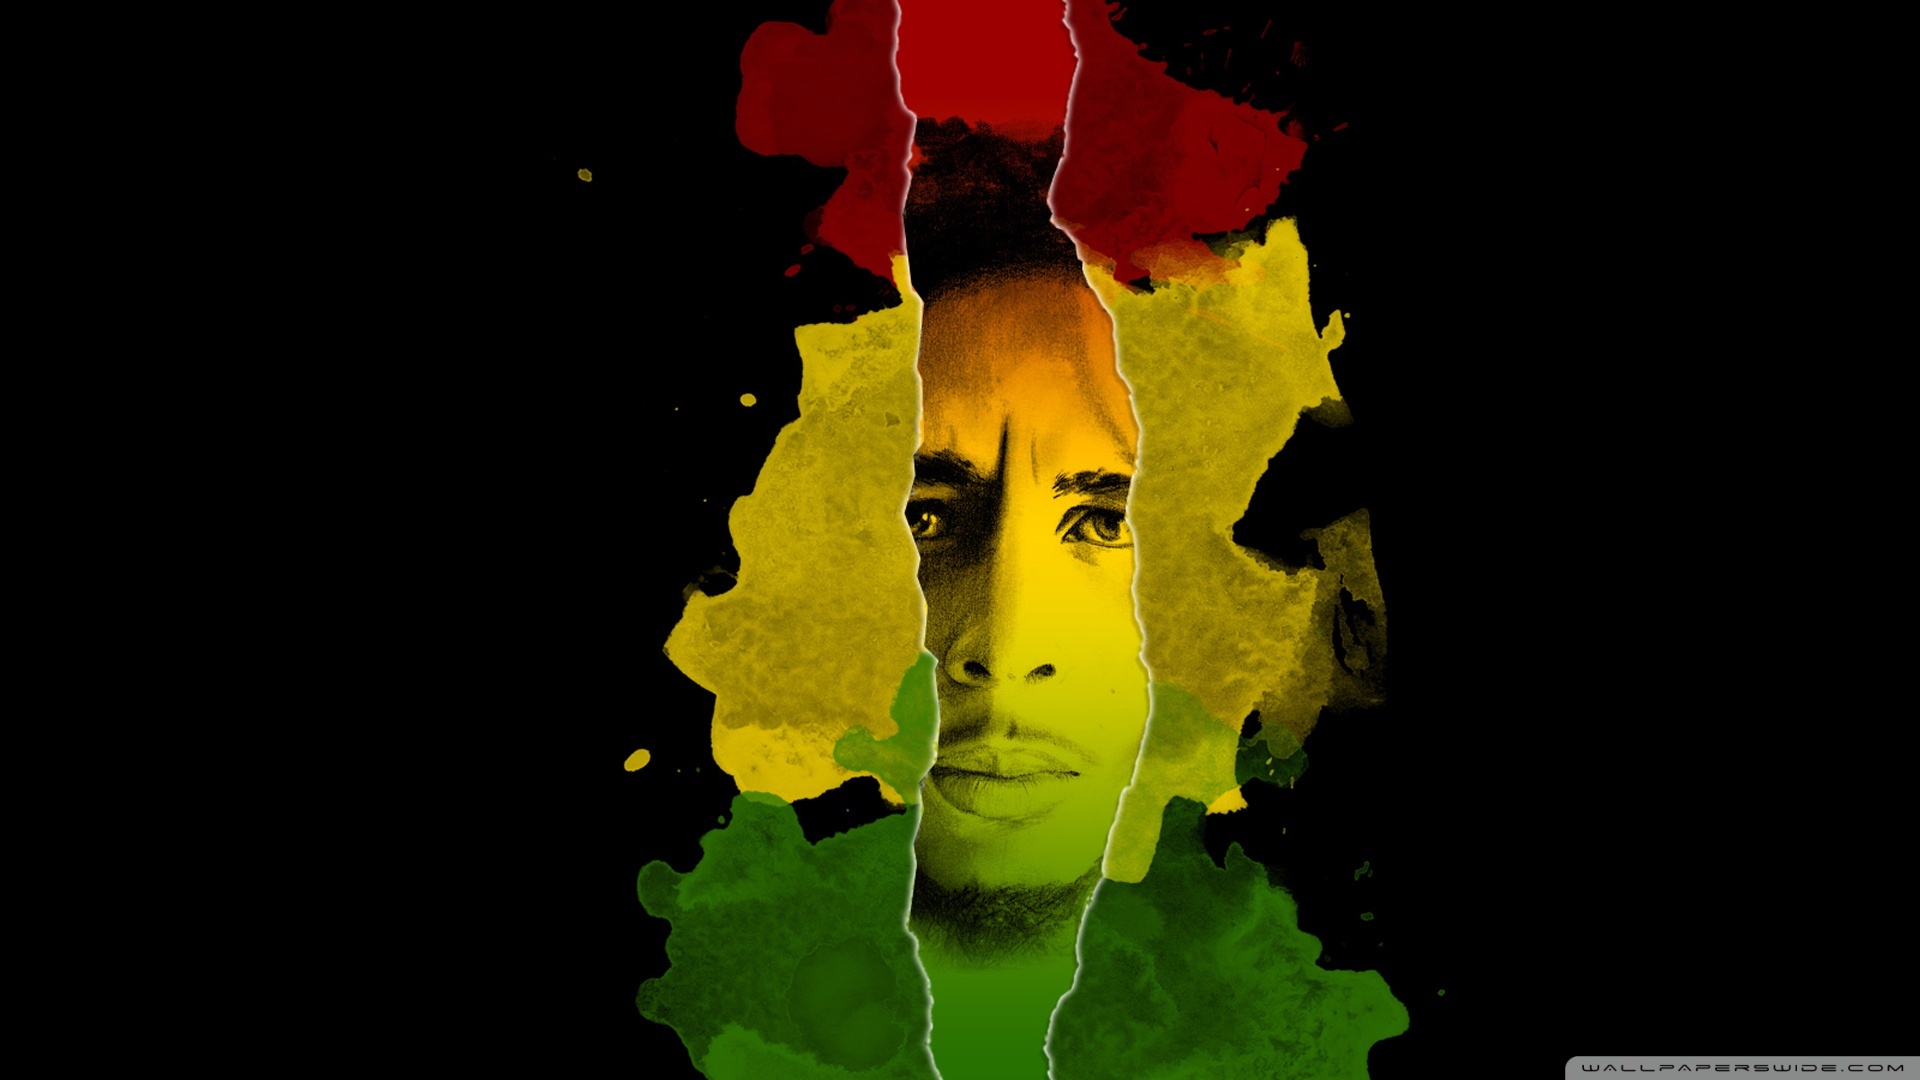 Télécharger des fonds d'écran Bob Marley HD